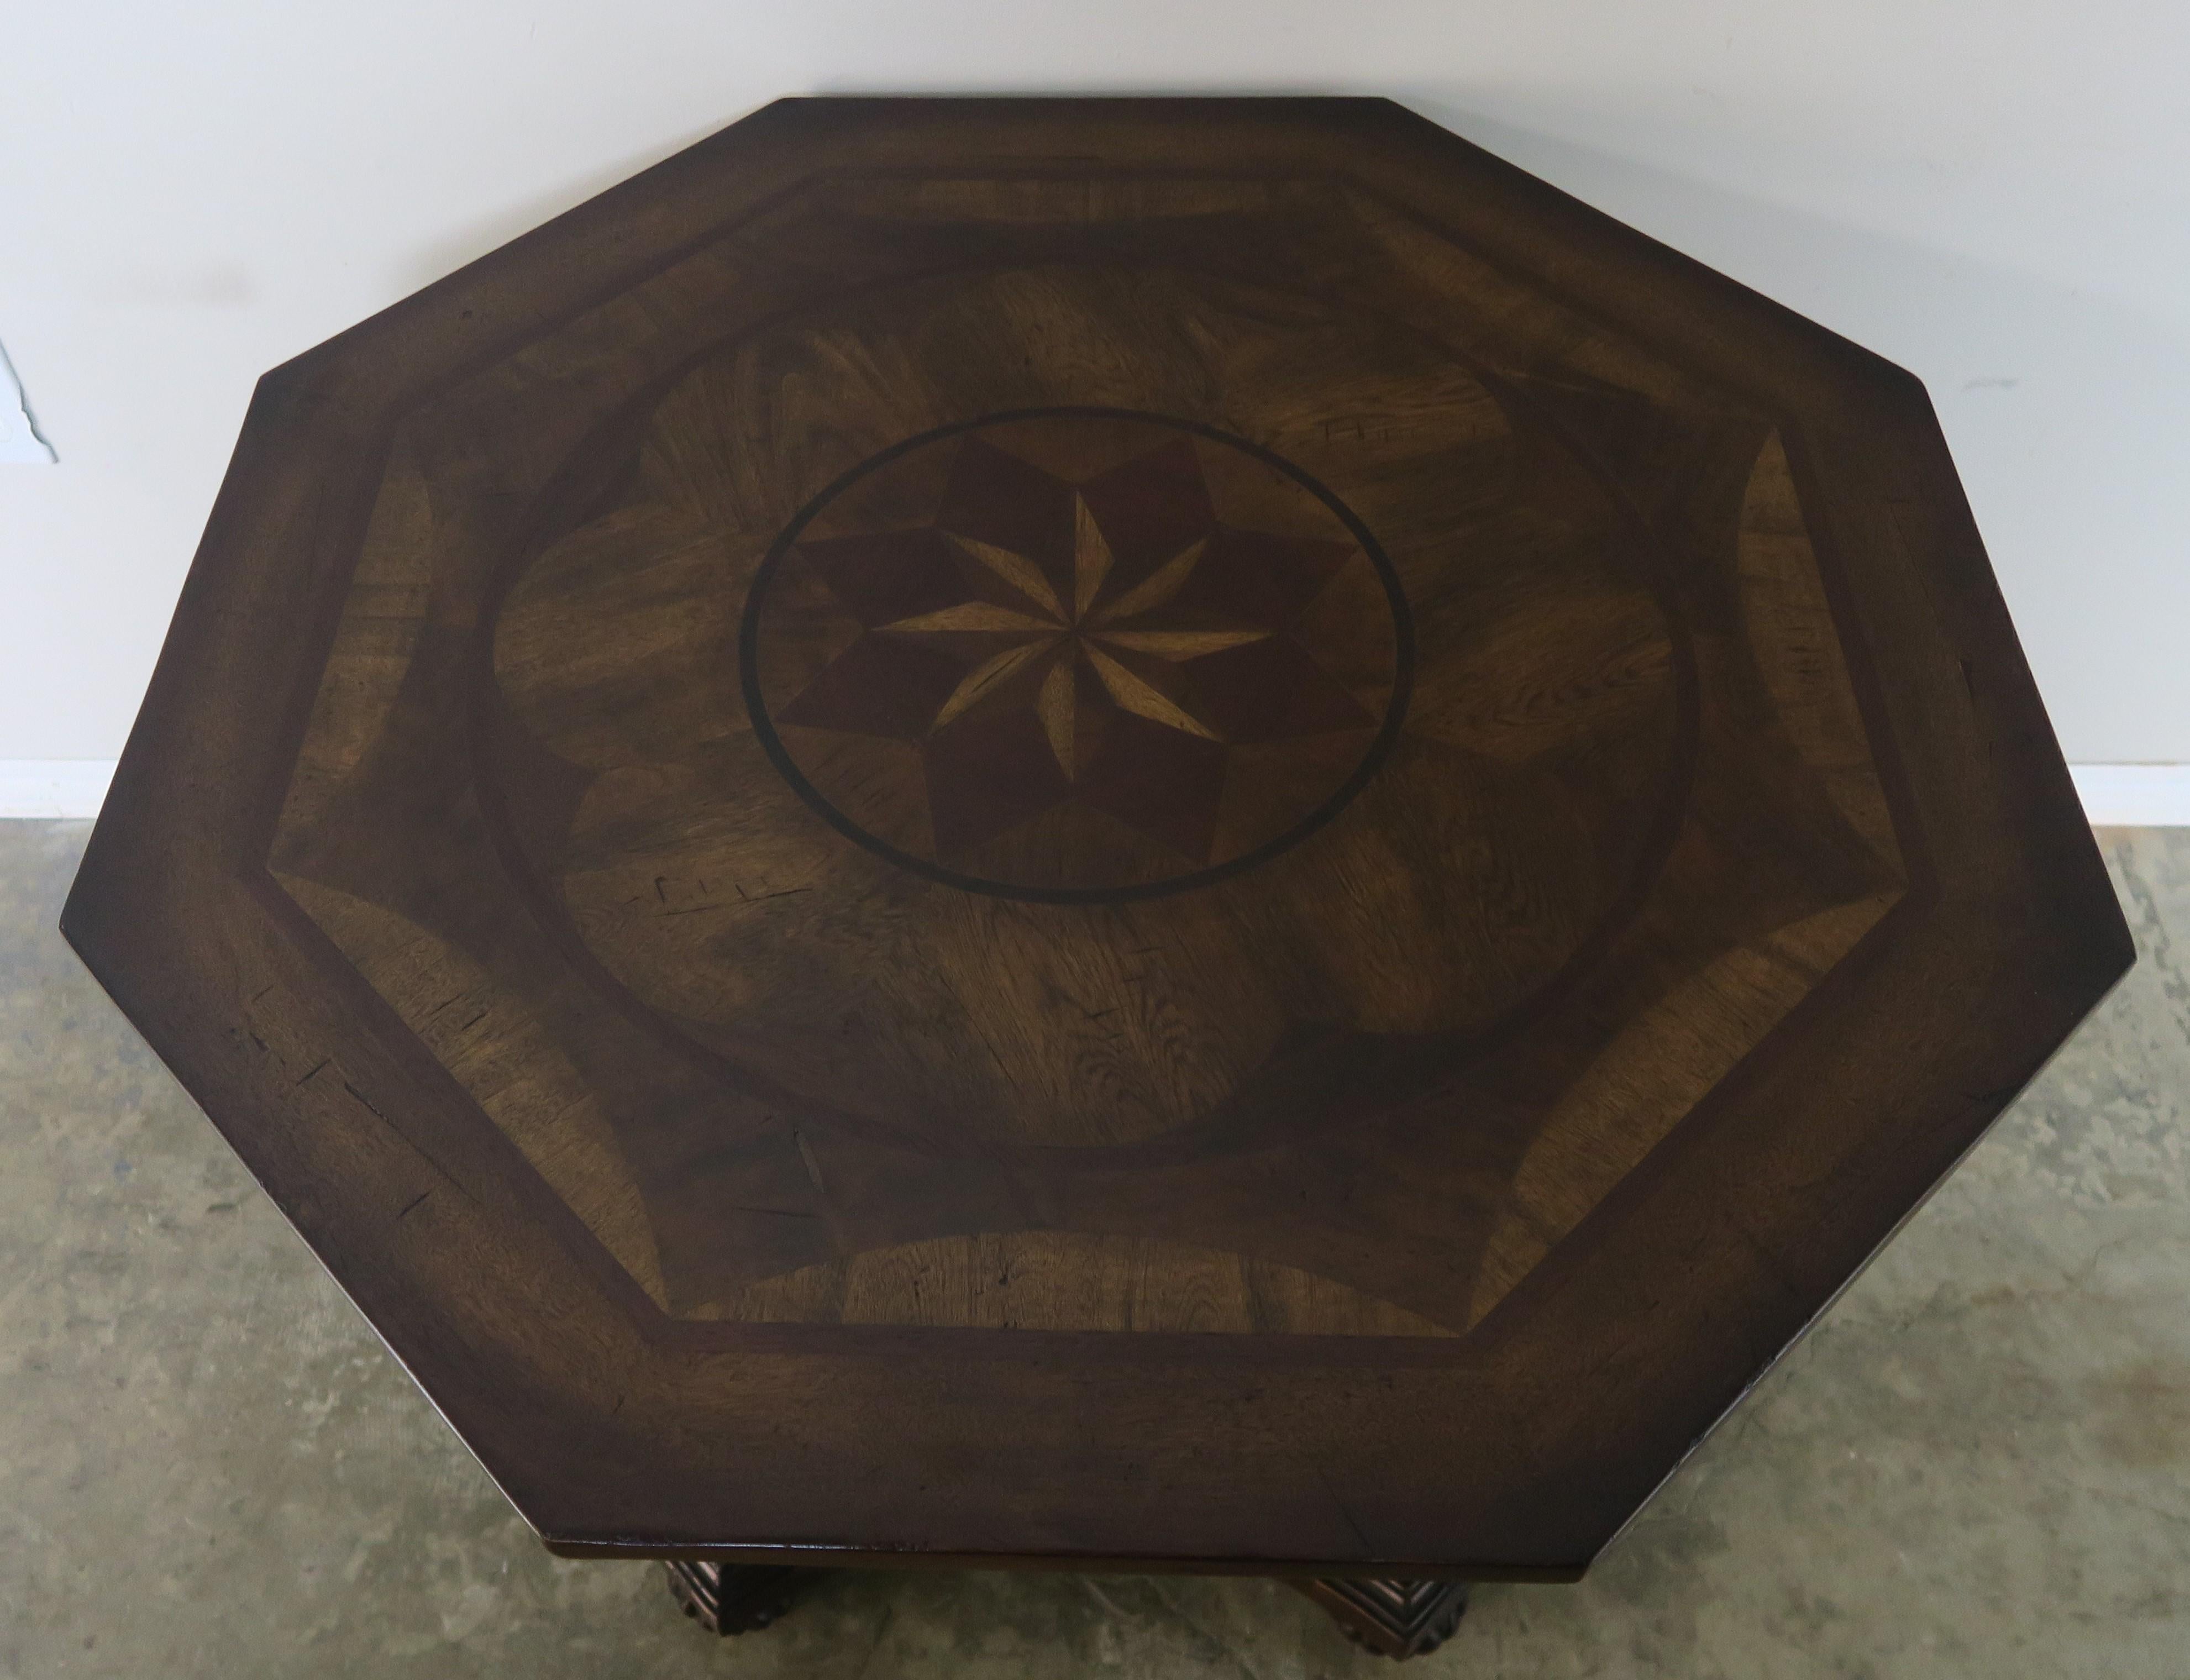 Italian Inlaid Octagonal Table with Star Design, 20th Century